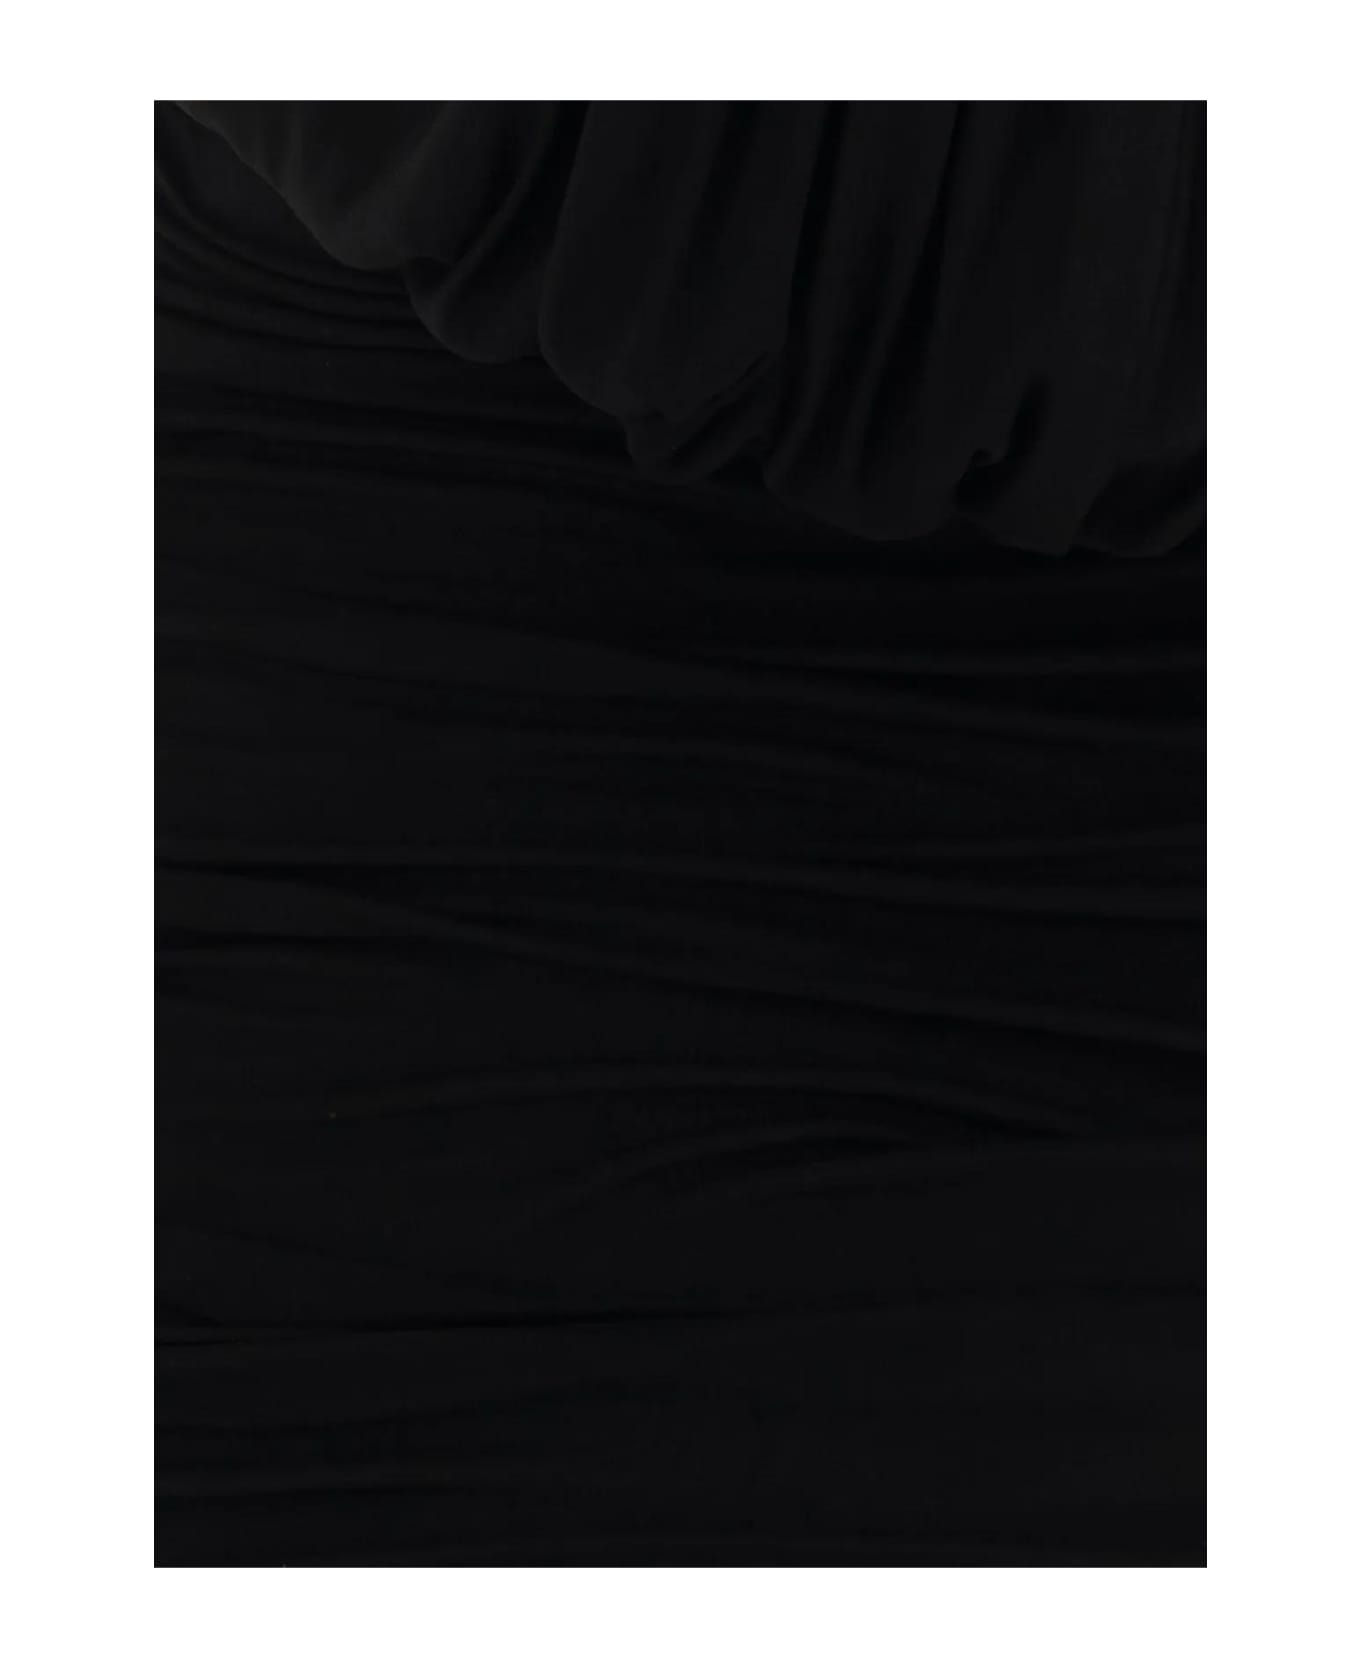 Saint Laurent Draped Sleeveless Dress - Black